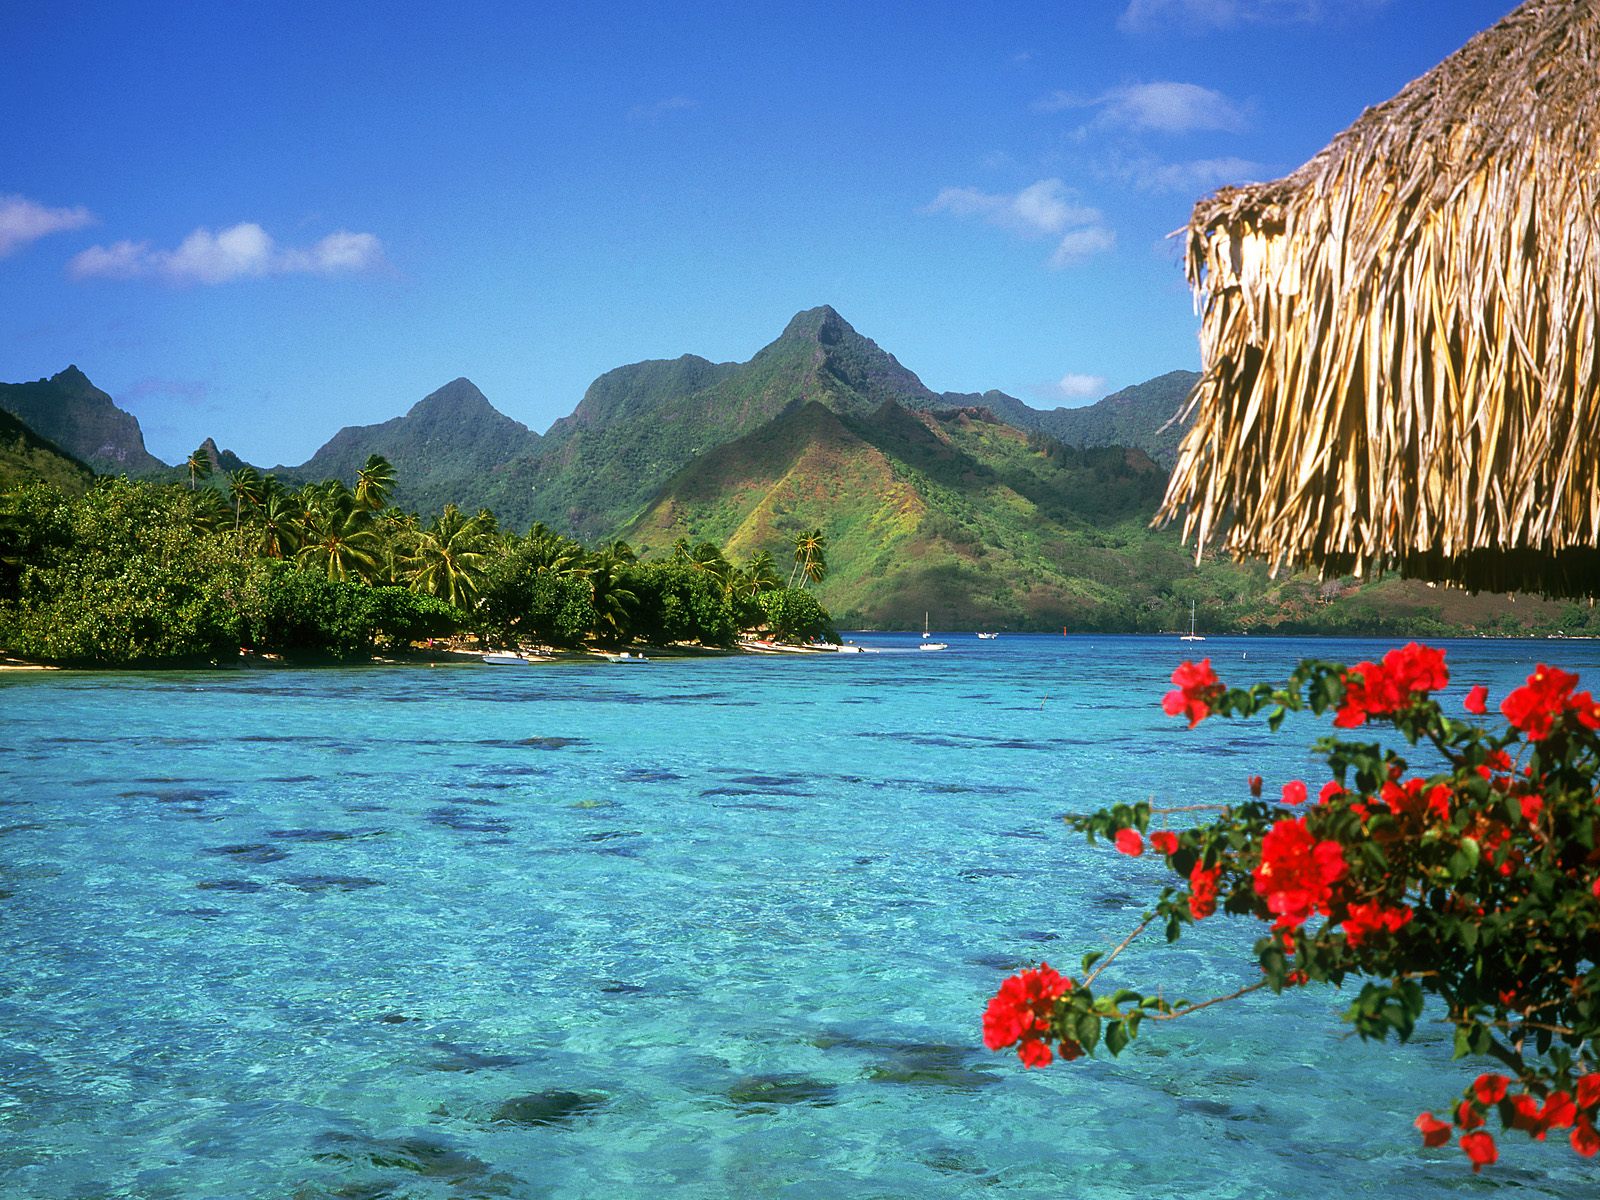 http://www.cruceroclick.com/admin/archivos/Image/PAISAJES/POLINESIA/Tranquil_Lagoon_Bora_Bora_Island_French_Polynesia.jpg